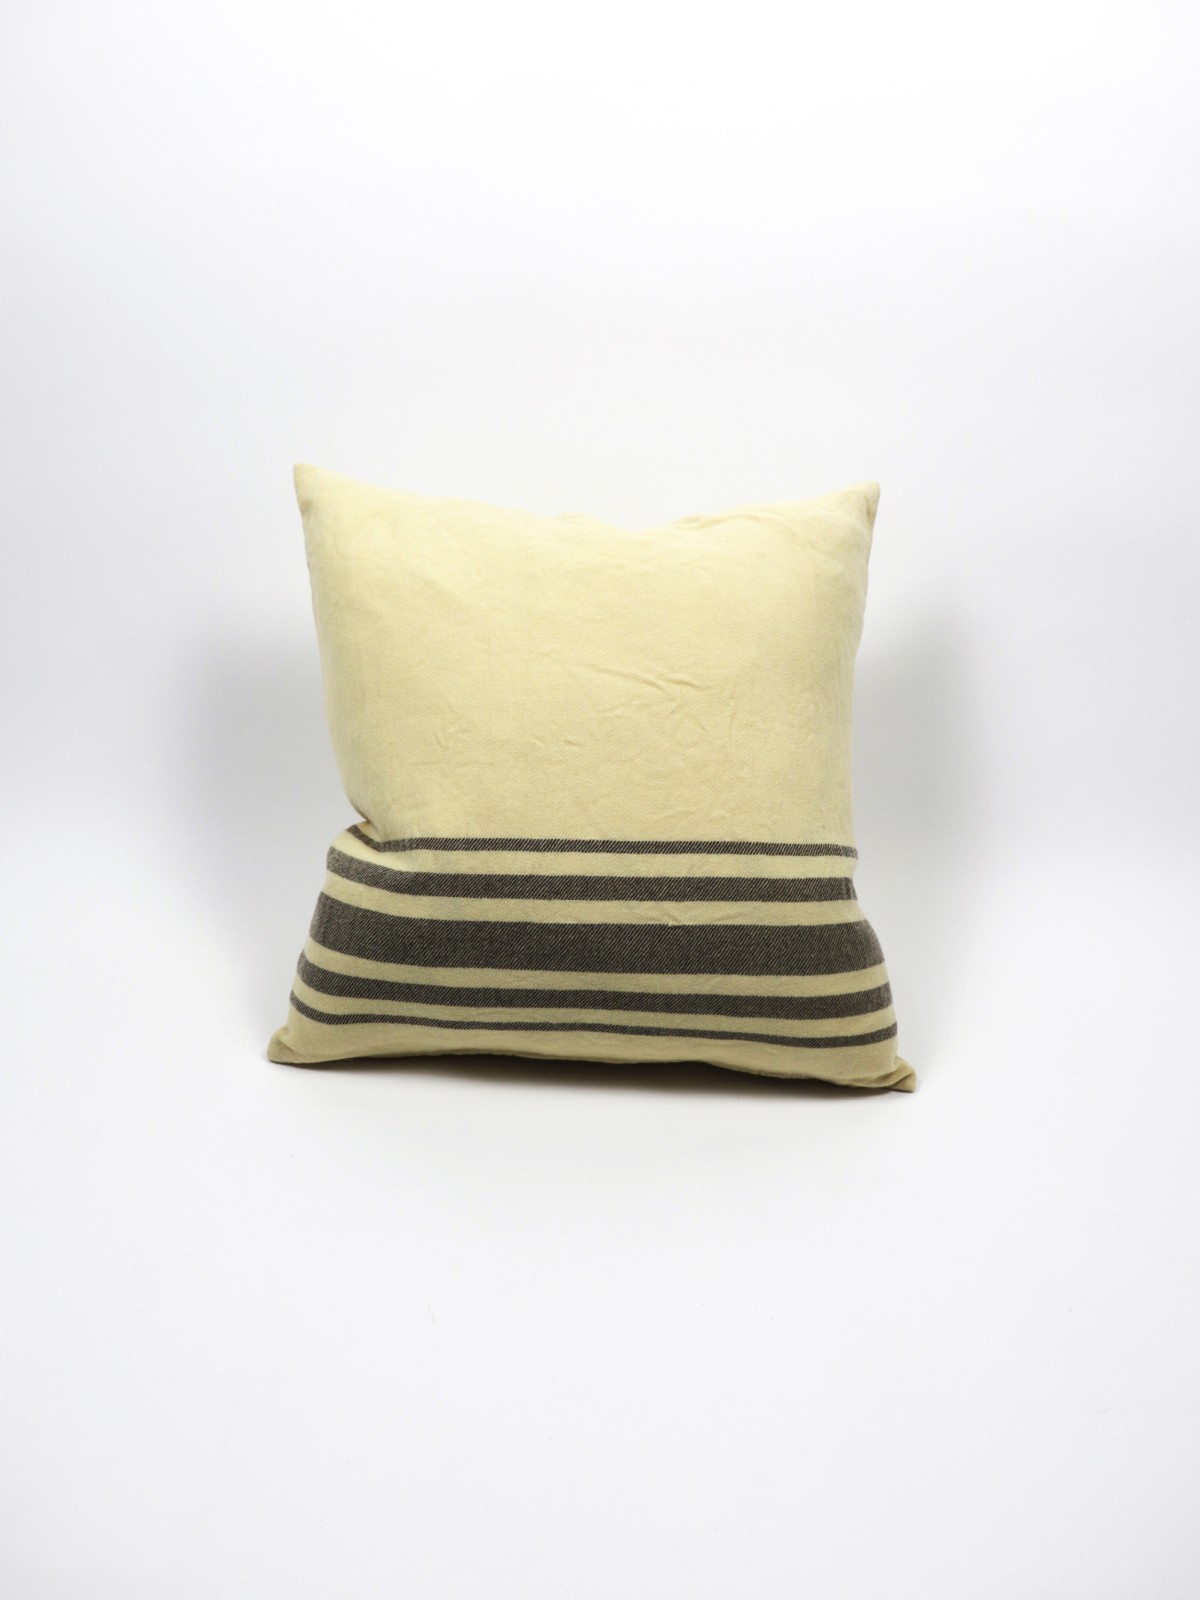 Blanket cushion, Brown remake, 1930's